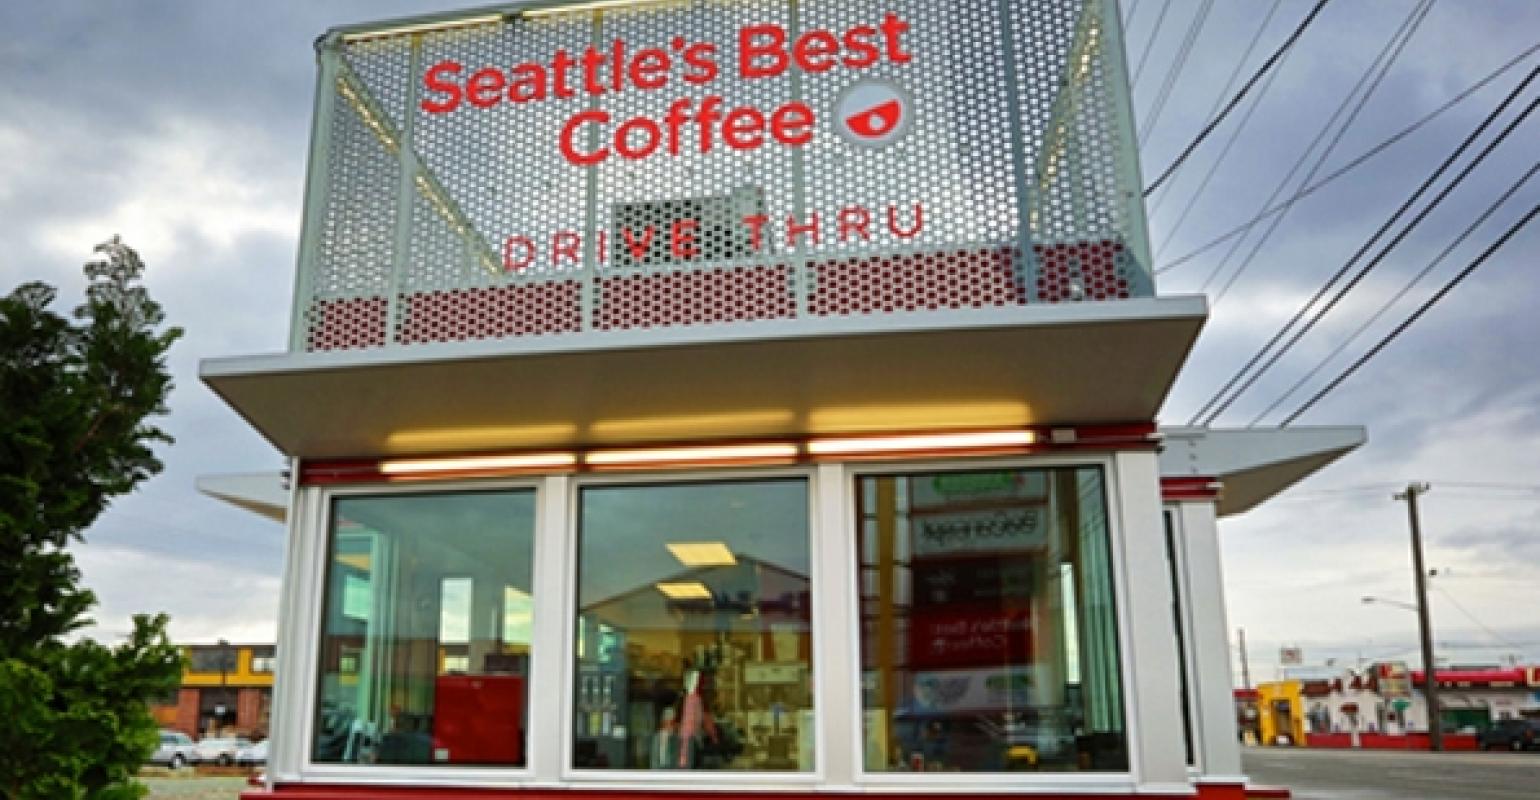 Cafe Elite Coffee Company - Coffee Shop, Drive Thru Coffee